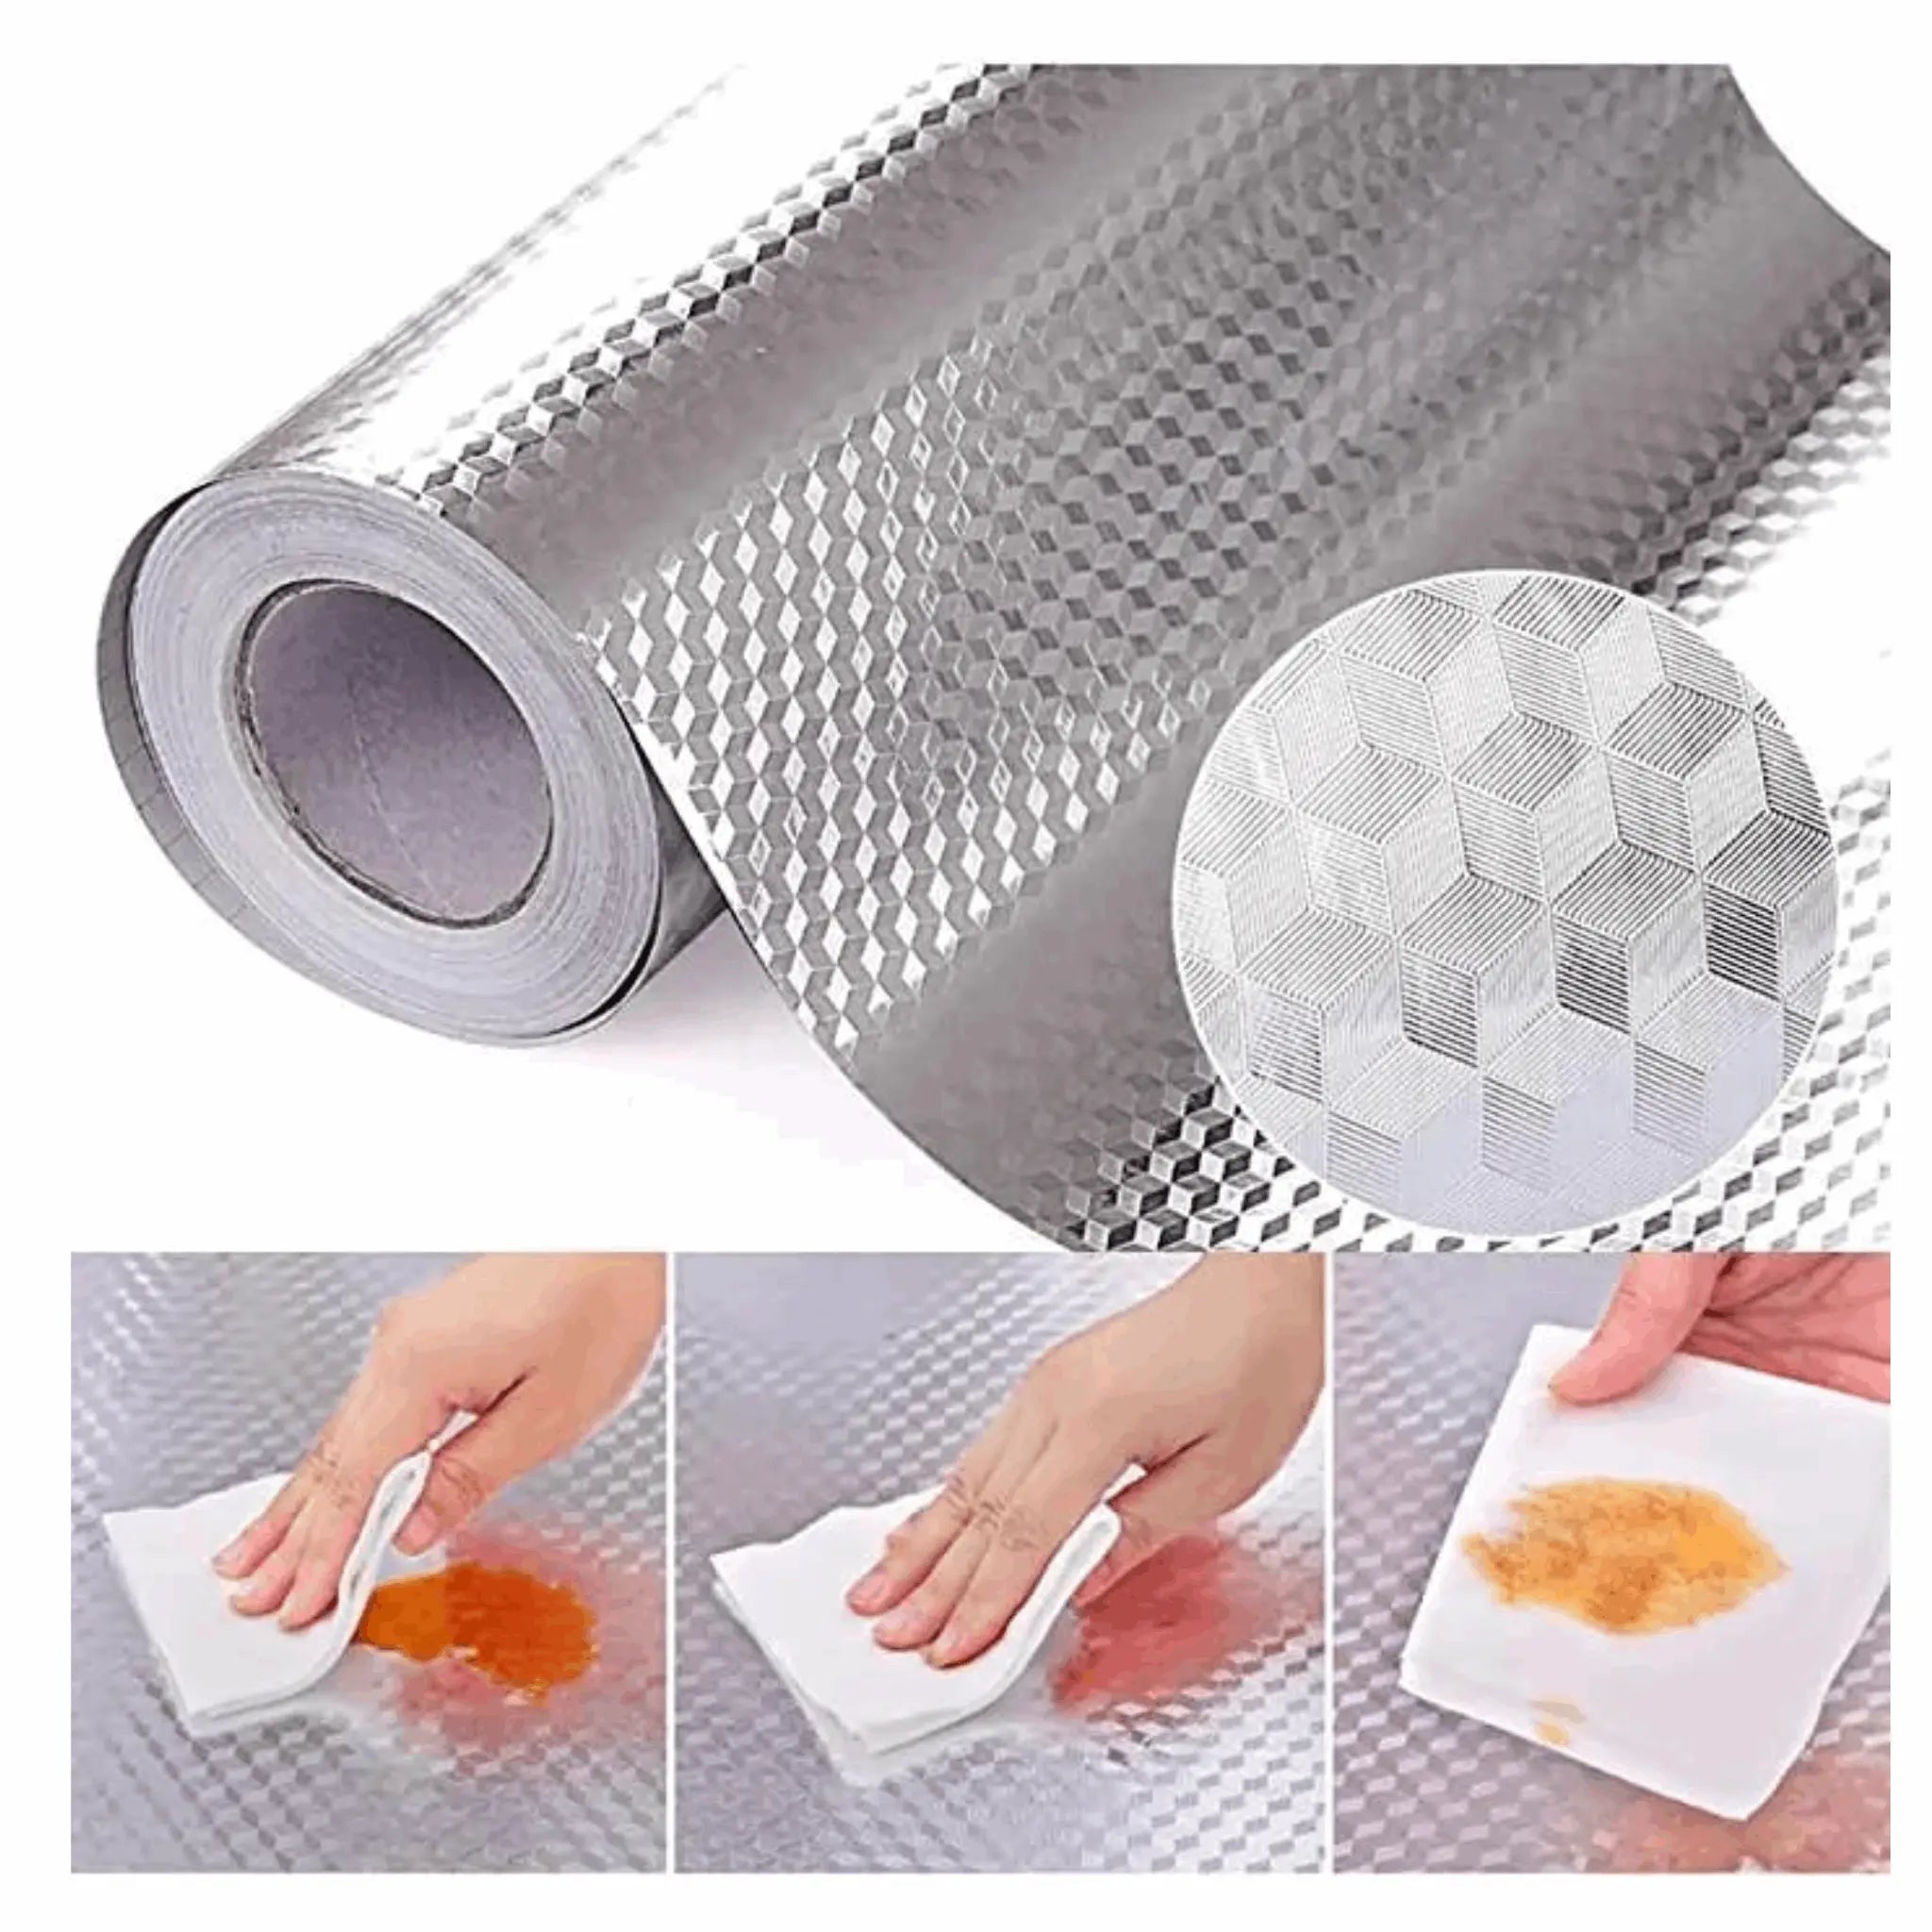 Kitchen Waterproof Oil Proof Aluminum Foil Stickers